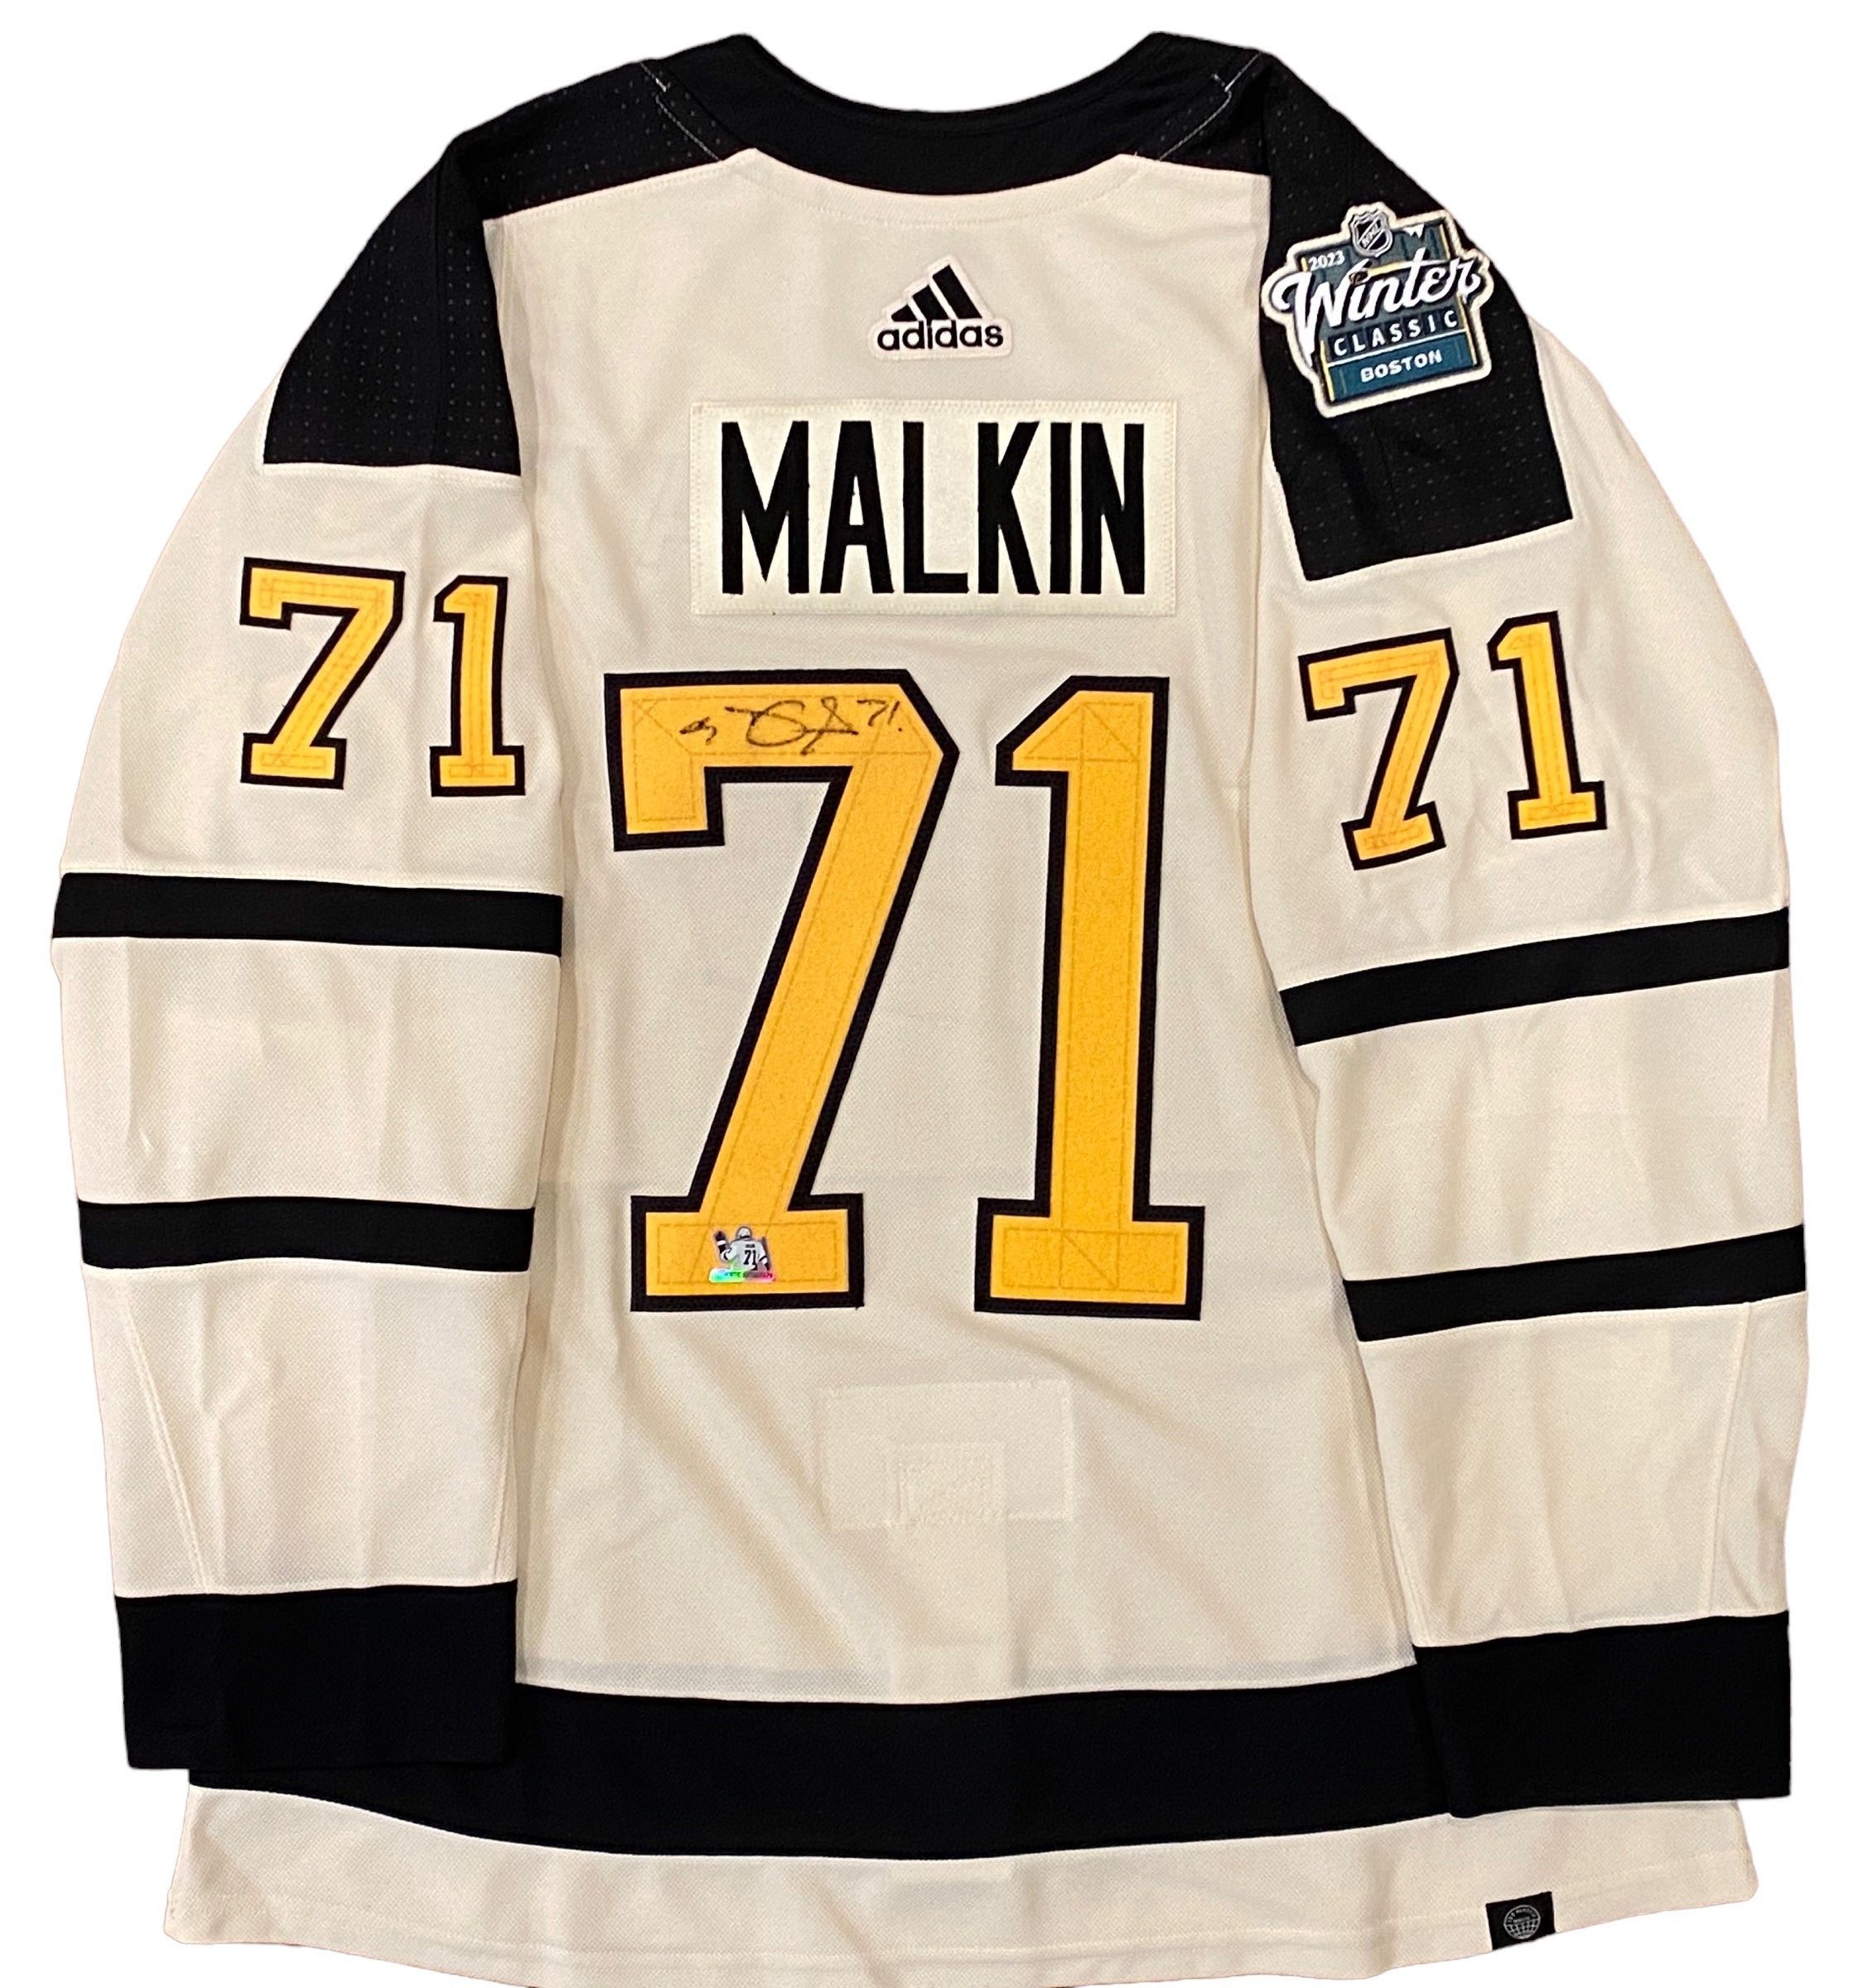 Evgeni Malkin Pittsburgh Penguins Fanatics Authentic Autographed